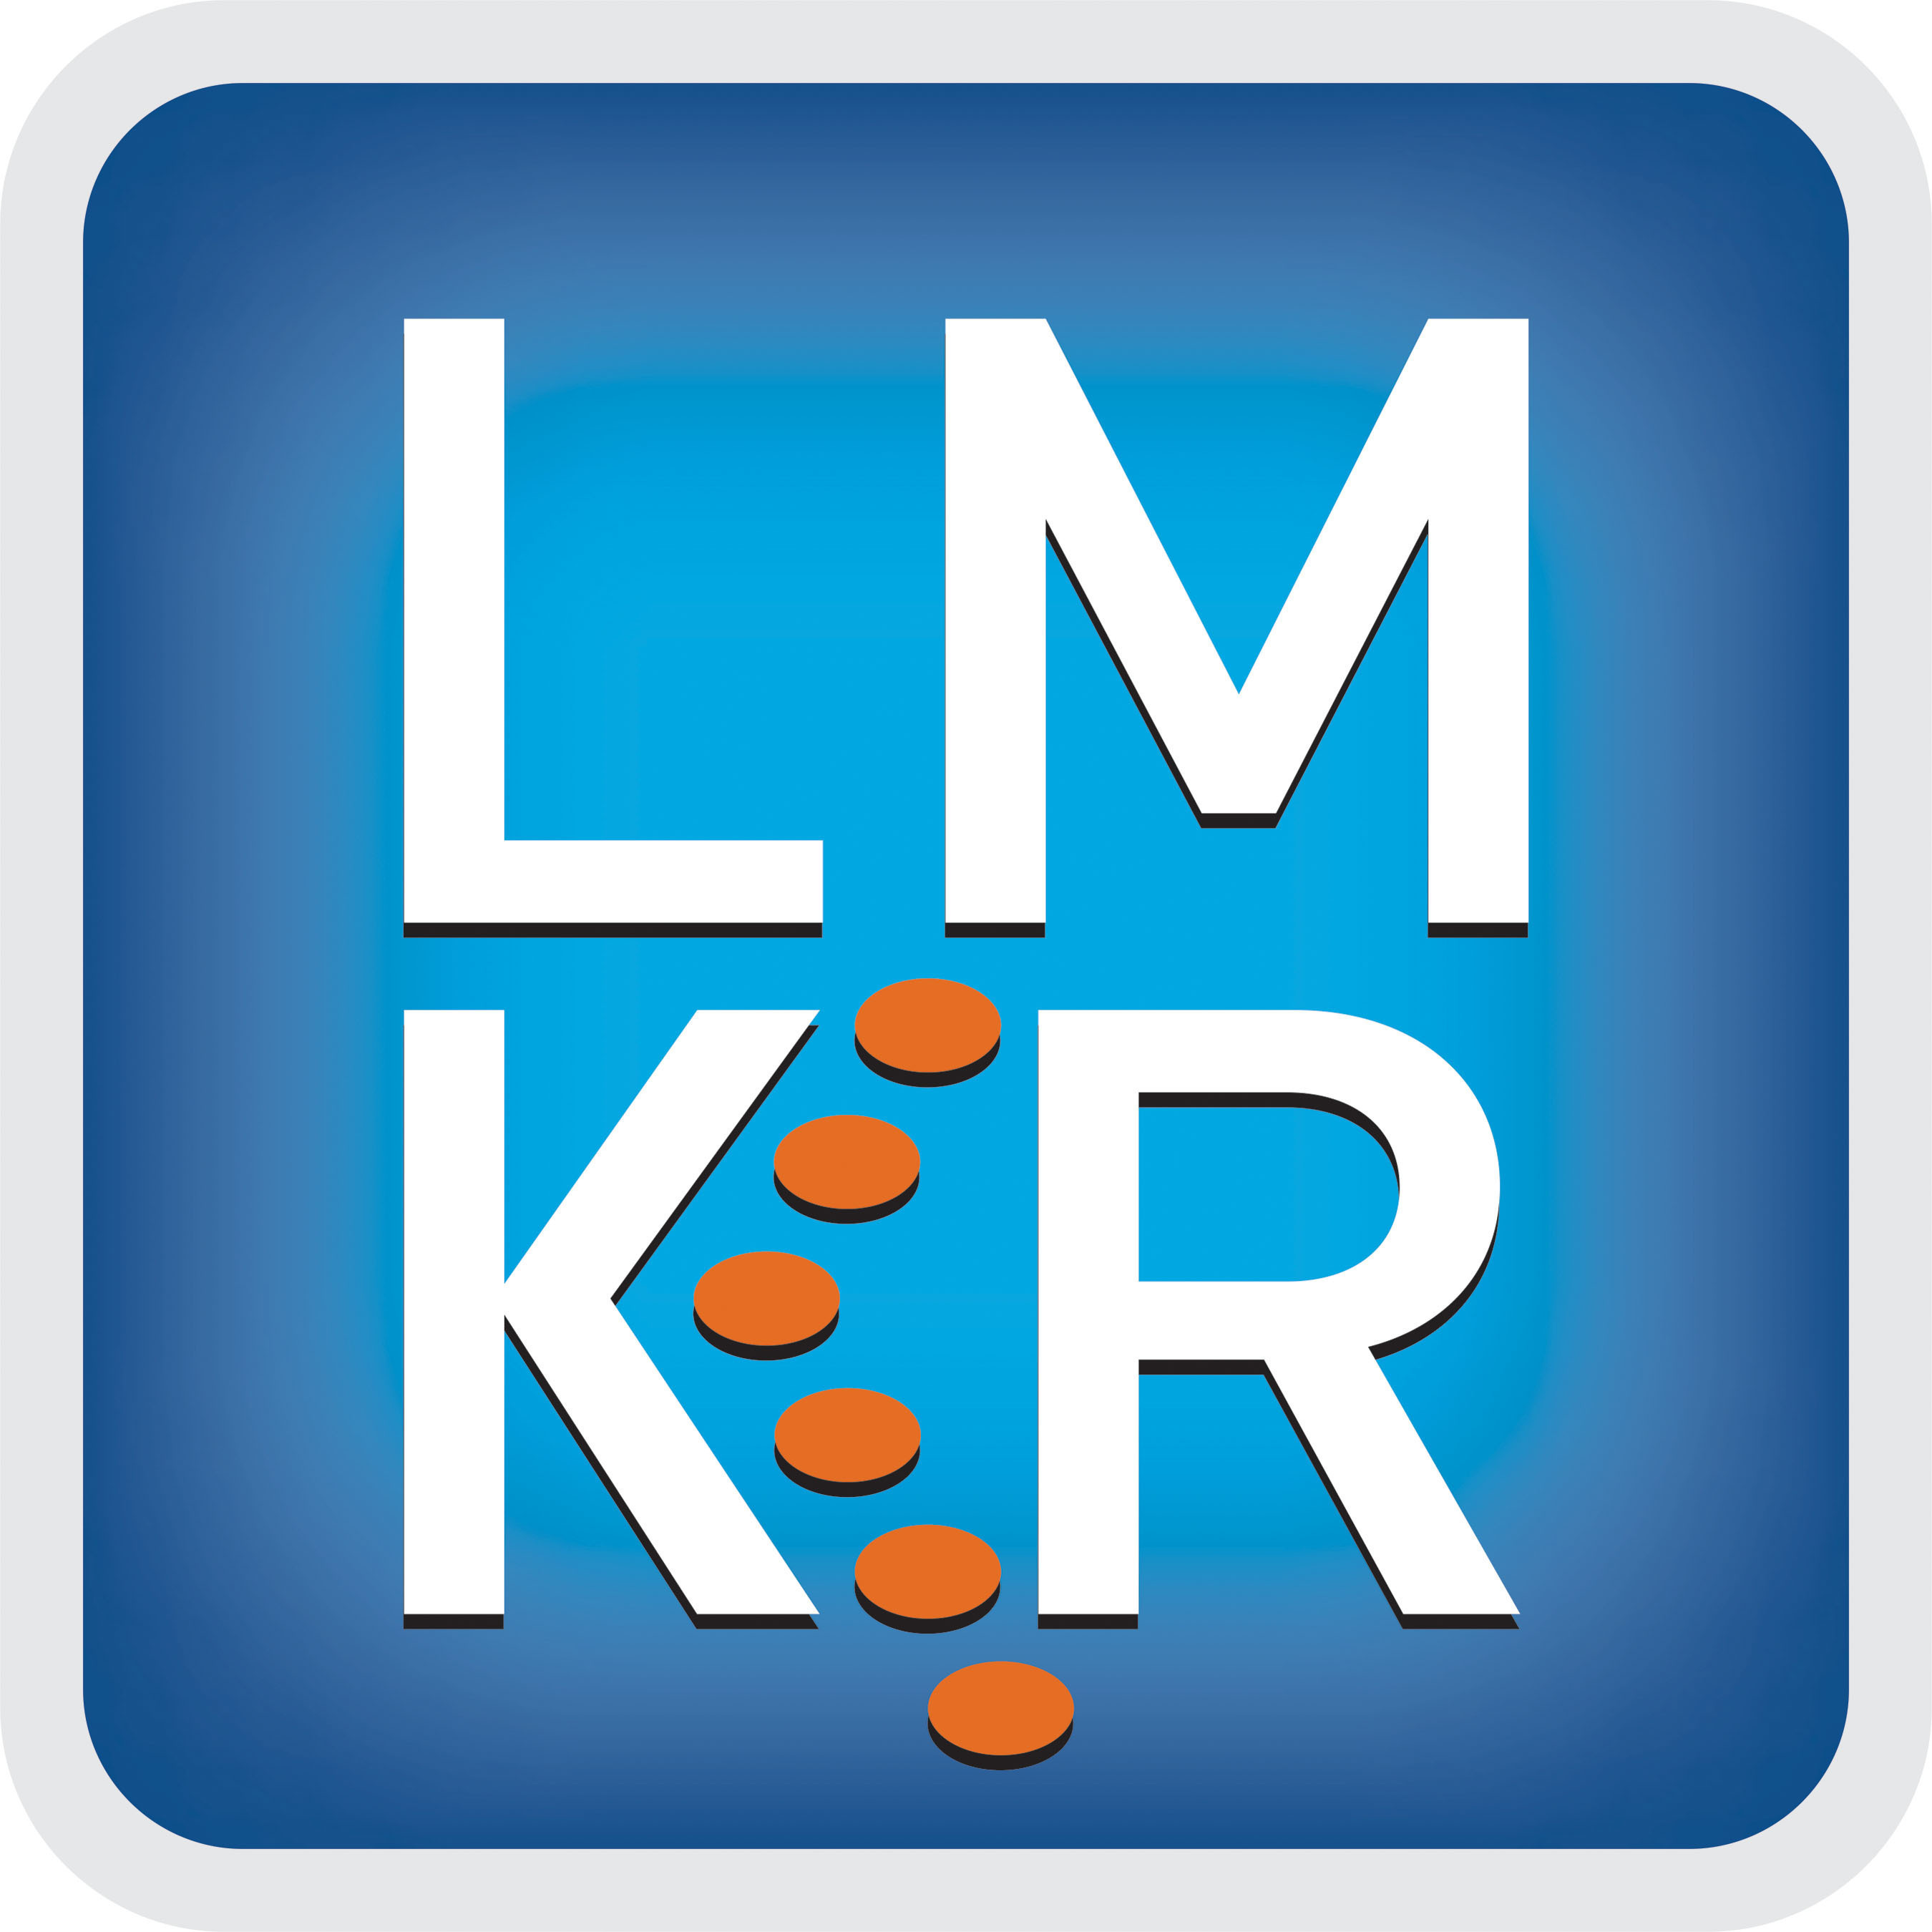 LMKR Logo. (PRNewsFoto/LMKR) (PRNewsFoto/LMKR)